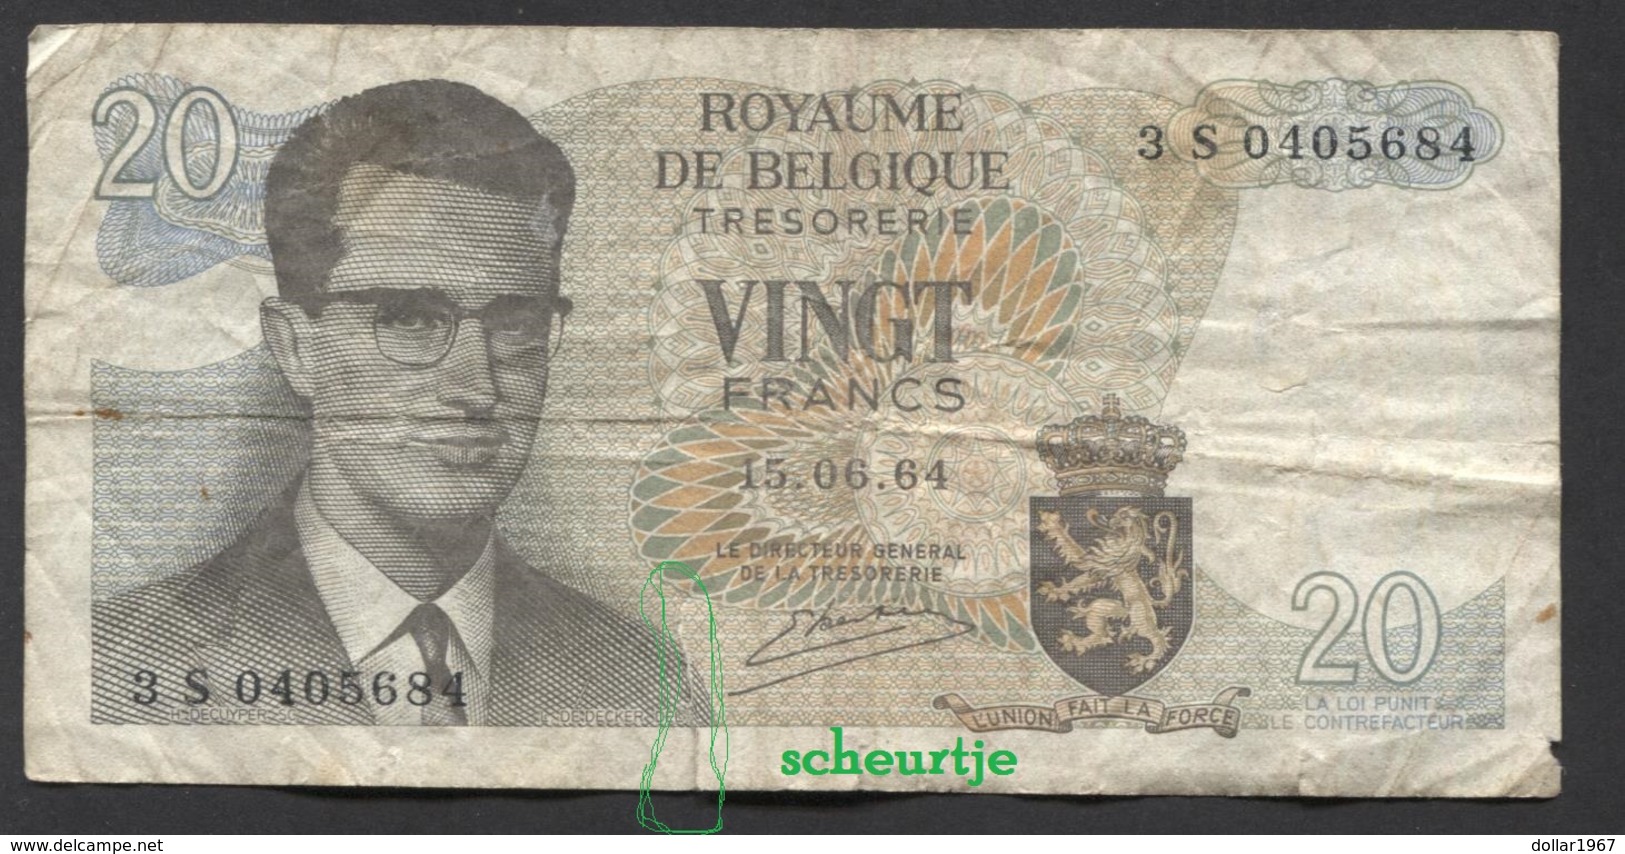 België Belgique Belgium 15 06 1964 -  20 Francs Atomium Baudouin. 3 S 0405684 - 20 Francos